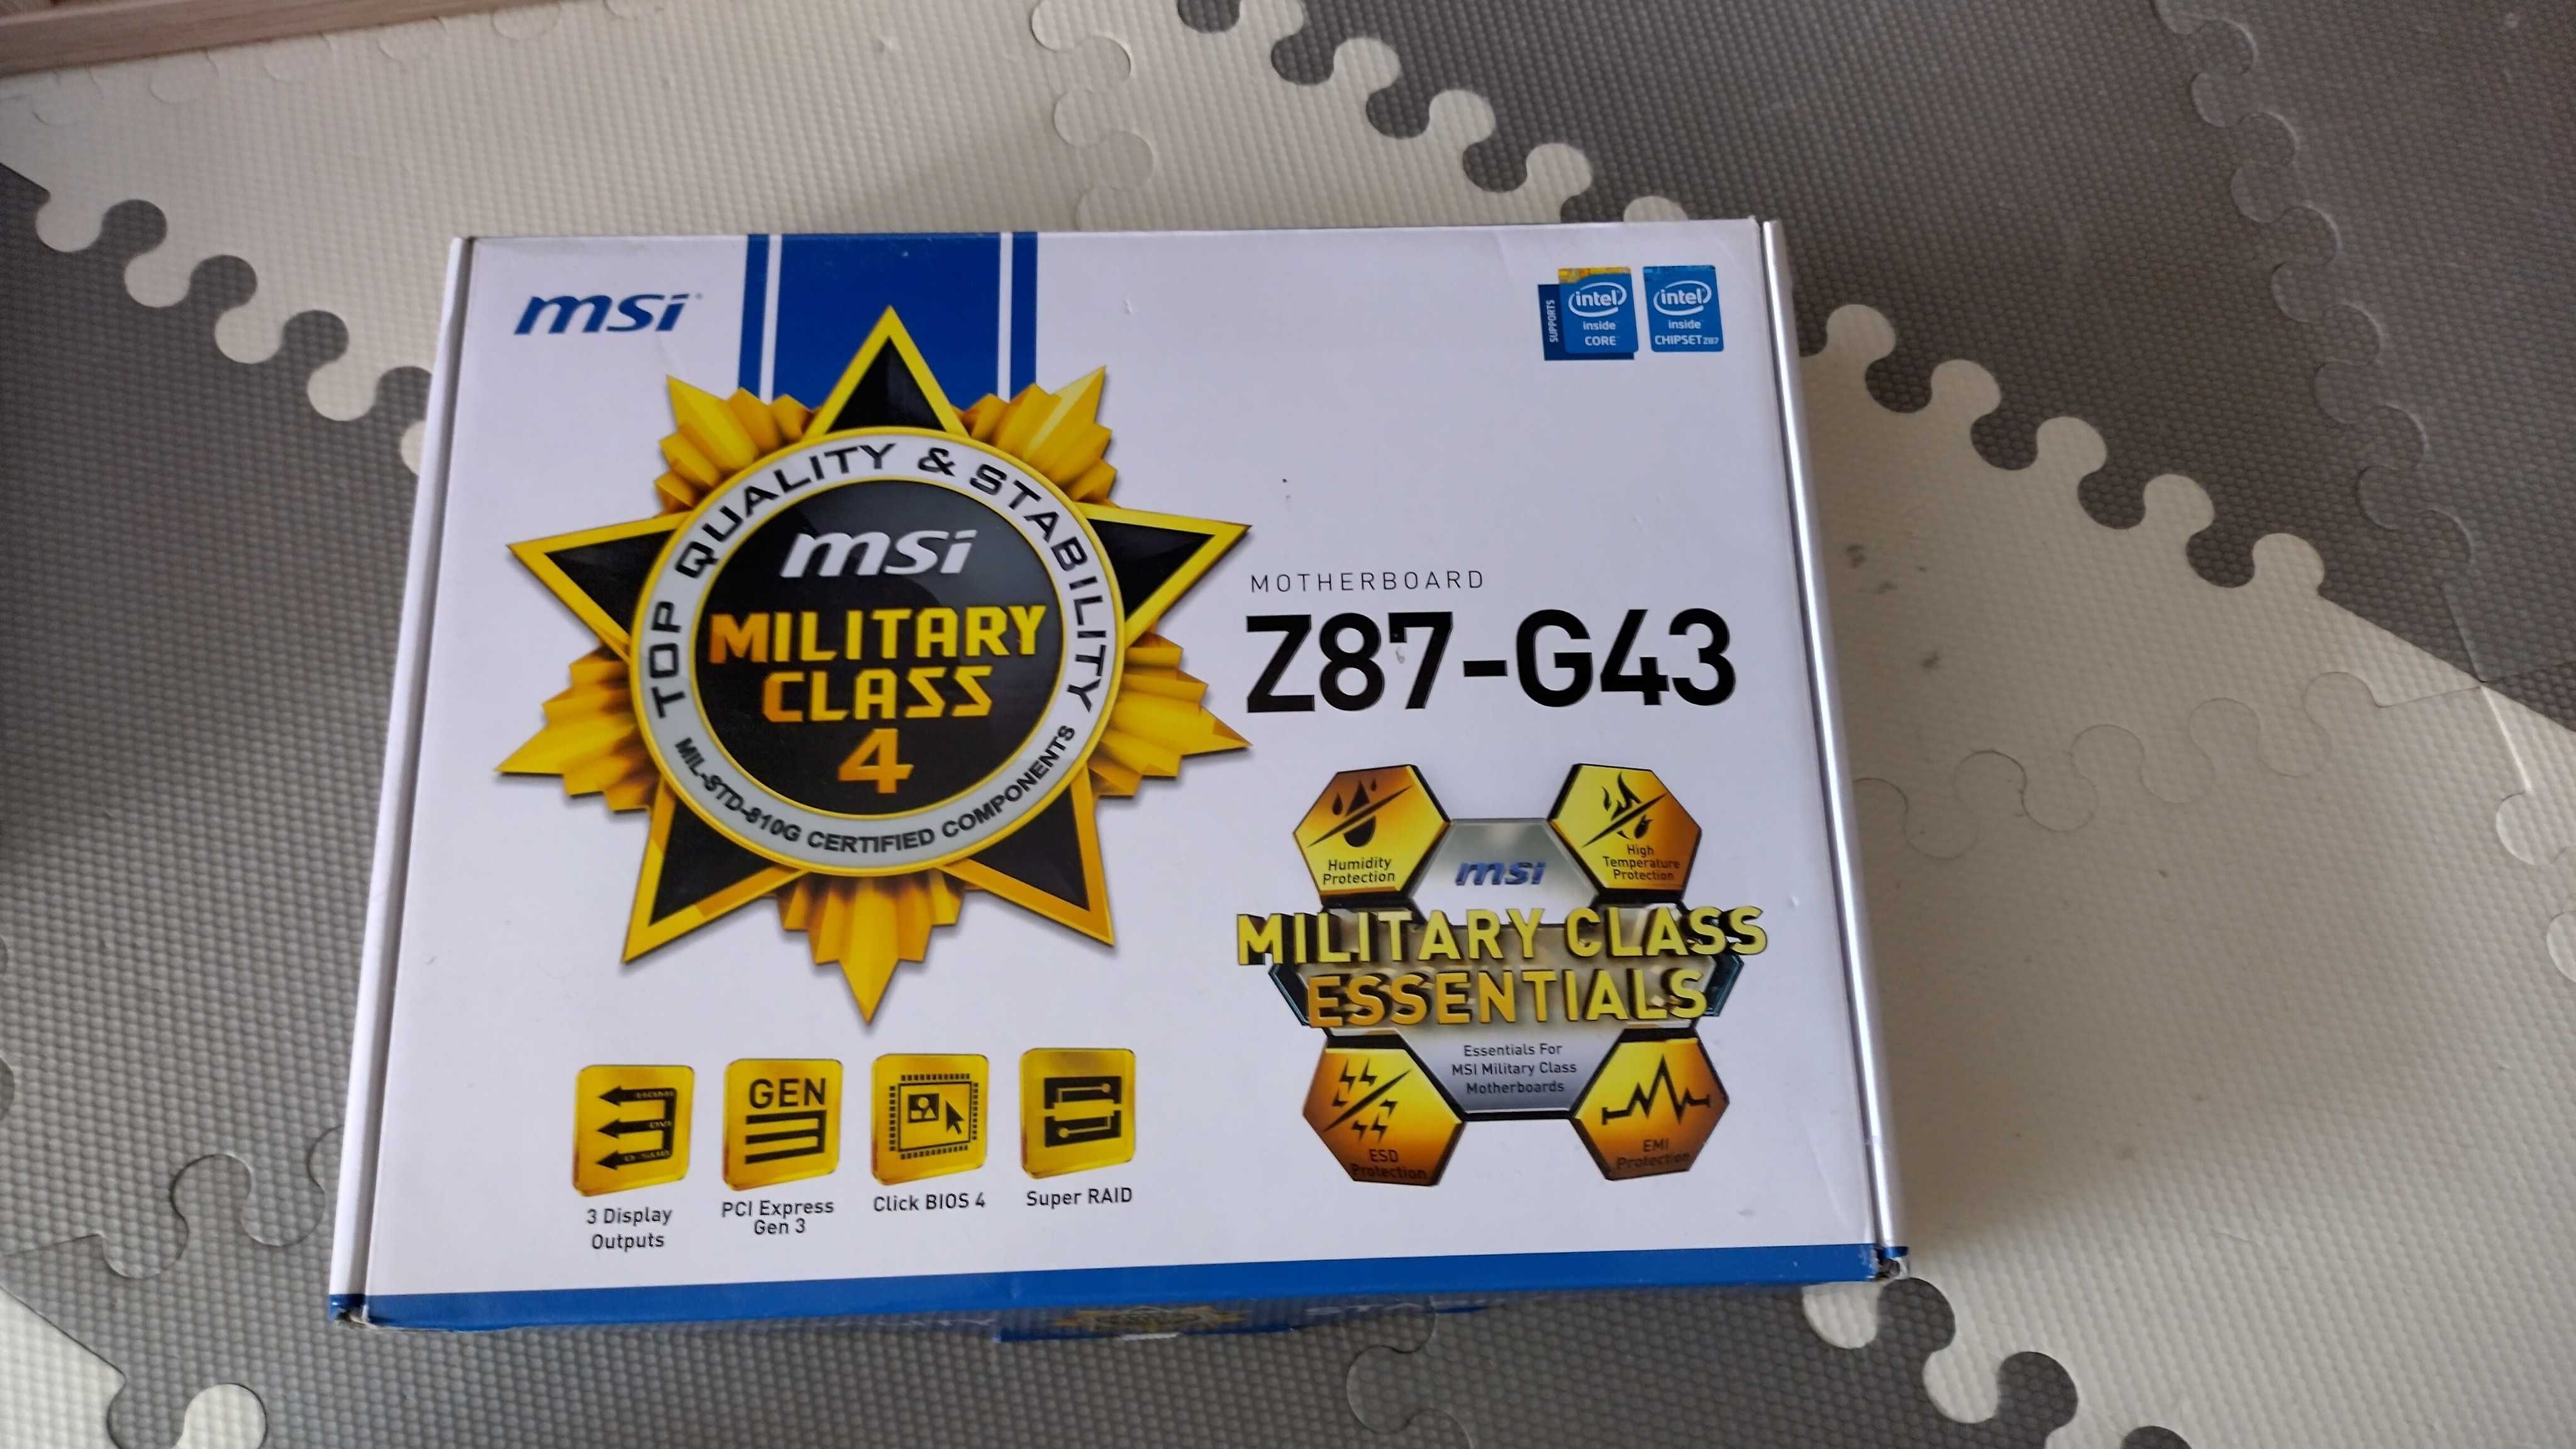 Intel Core i5-4670K + MSI Z87-G43 + Kingston HyperX 8GB